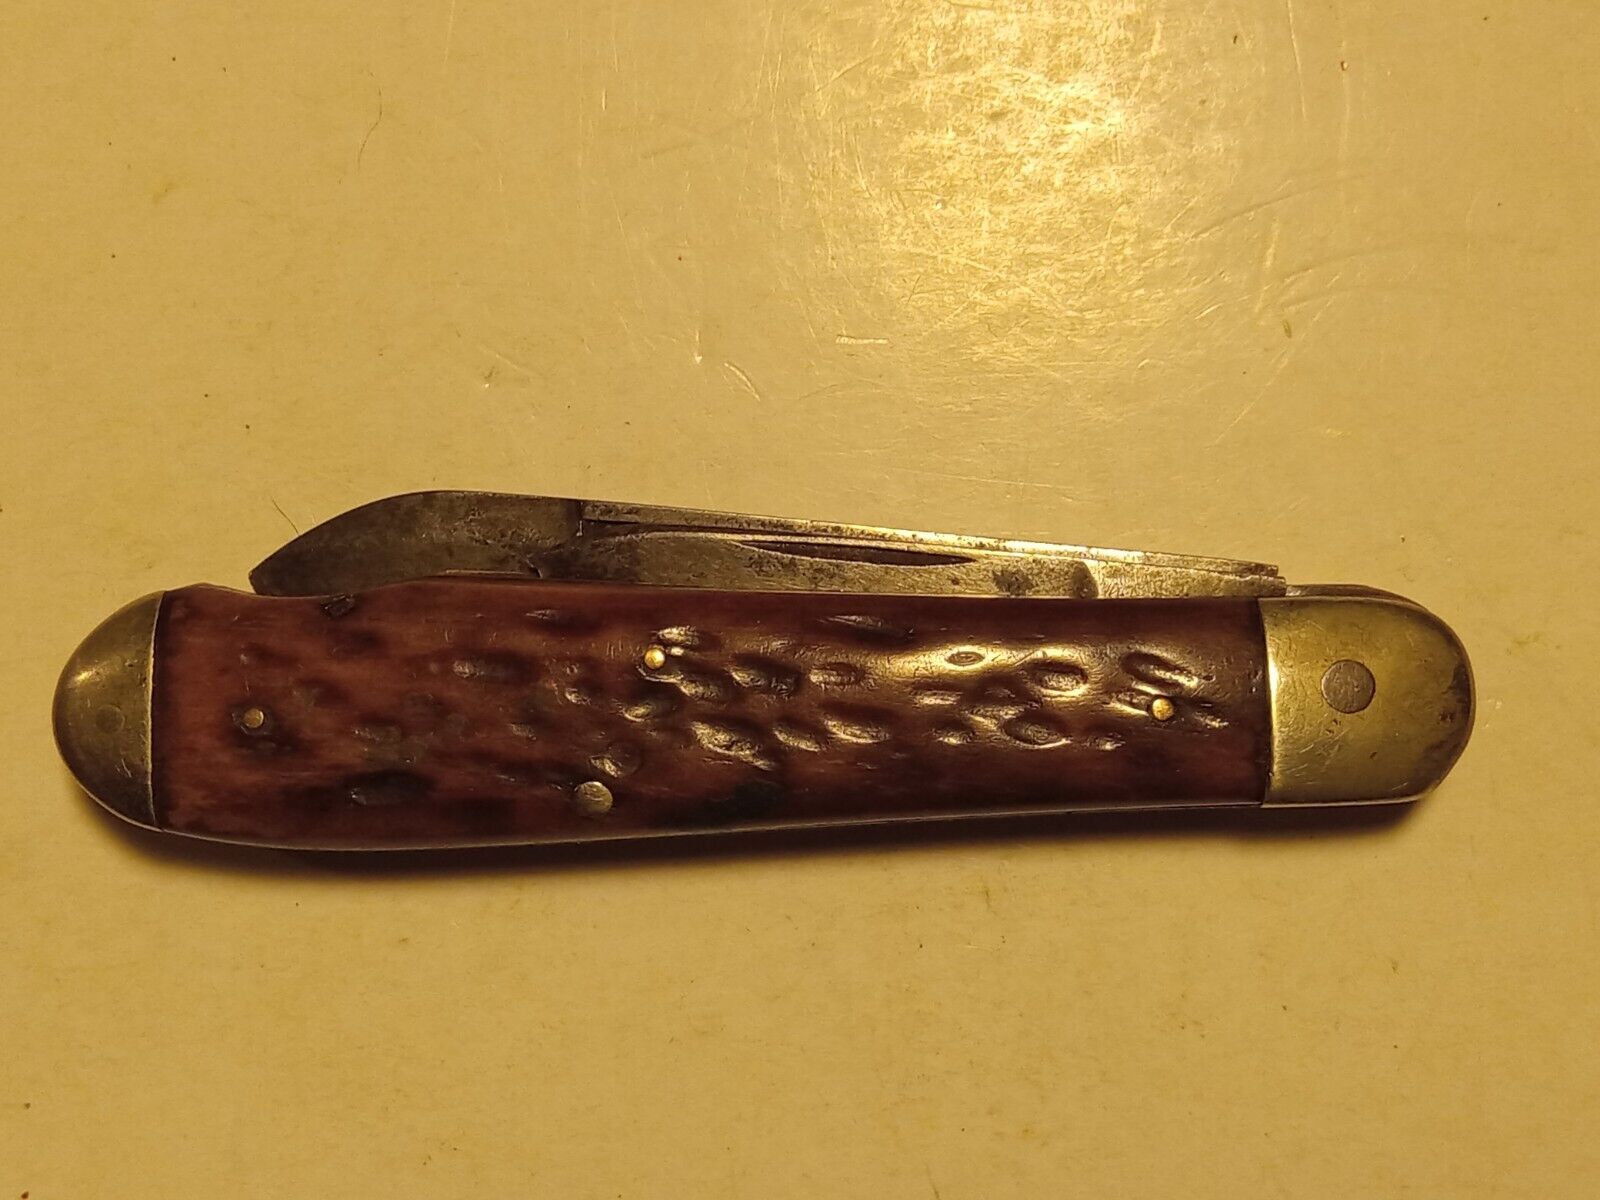 Berkshire Cut Co pocket knife